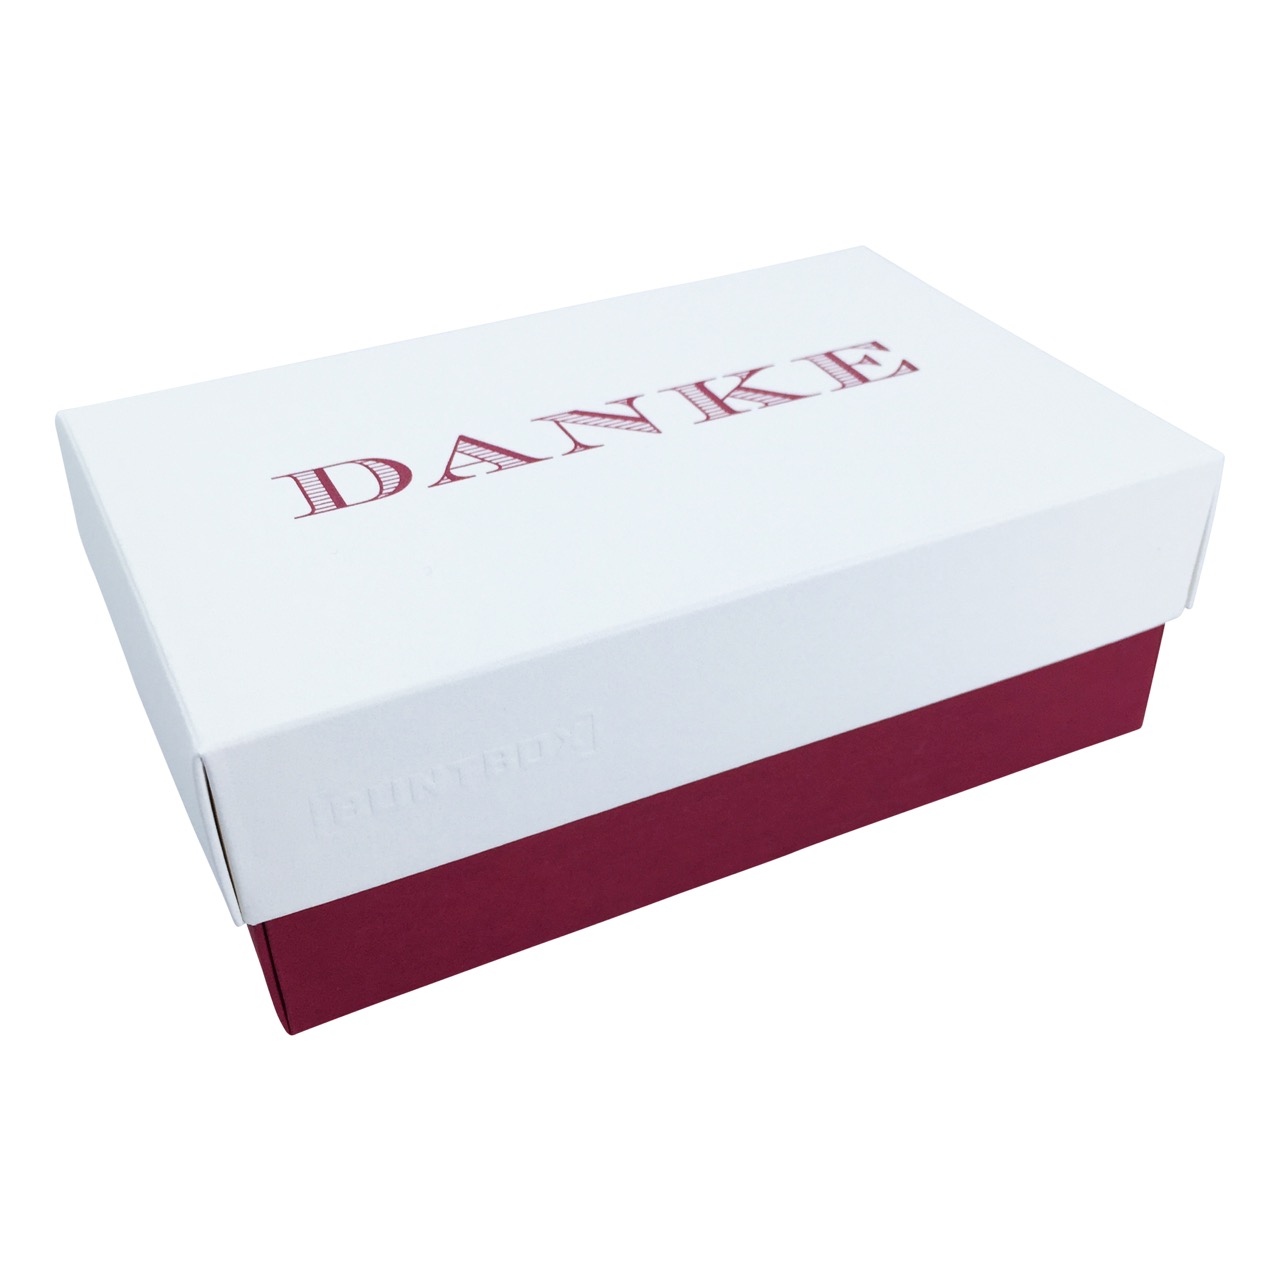 Fine Paper Edition Buntbox Champagner - Bordeaux 'Danke' - Rot